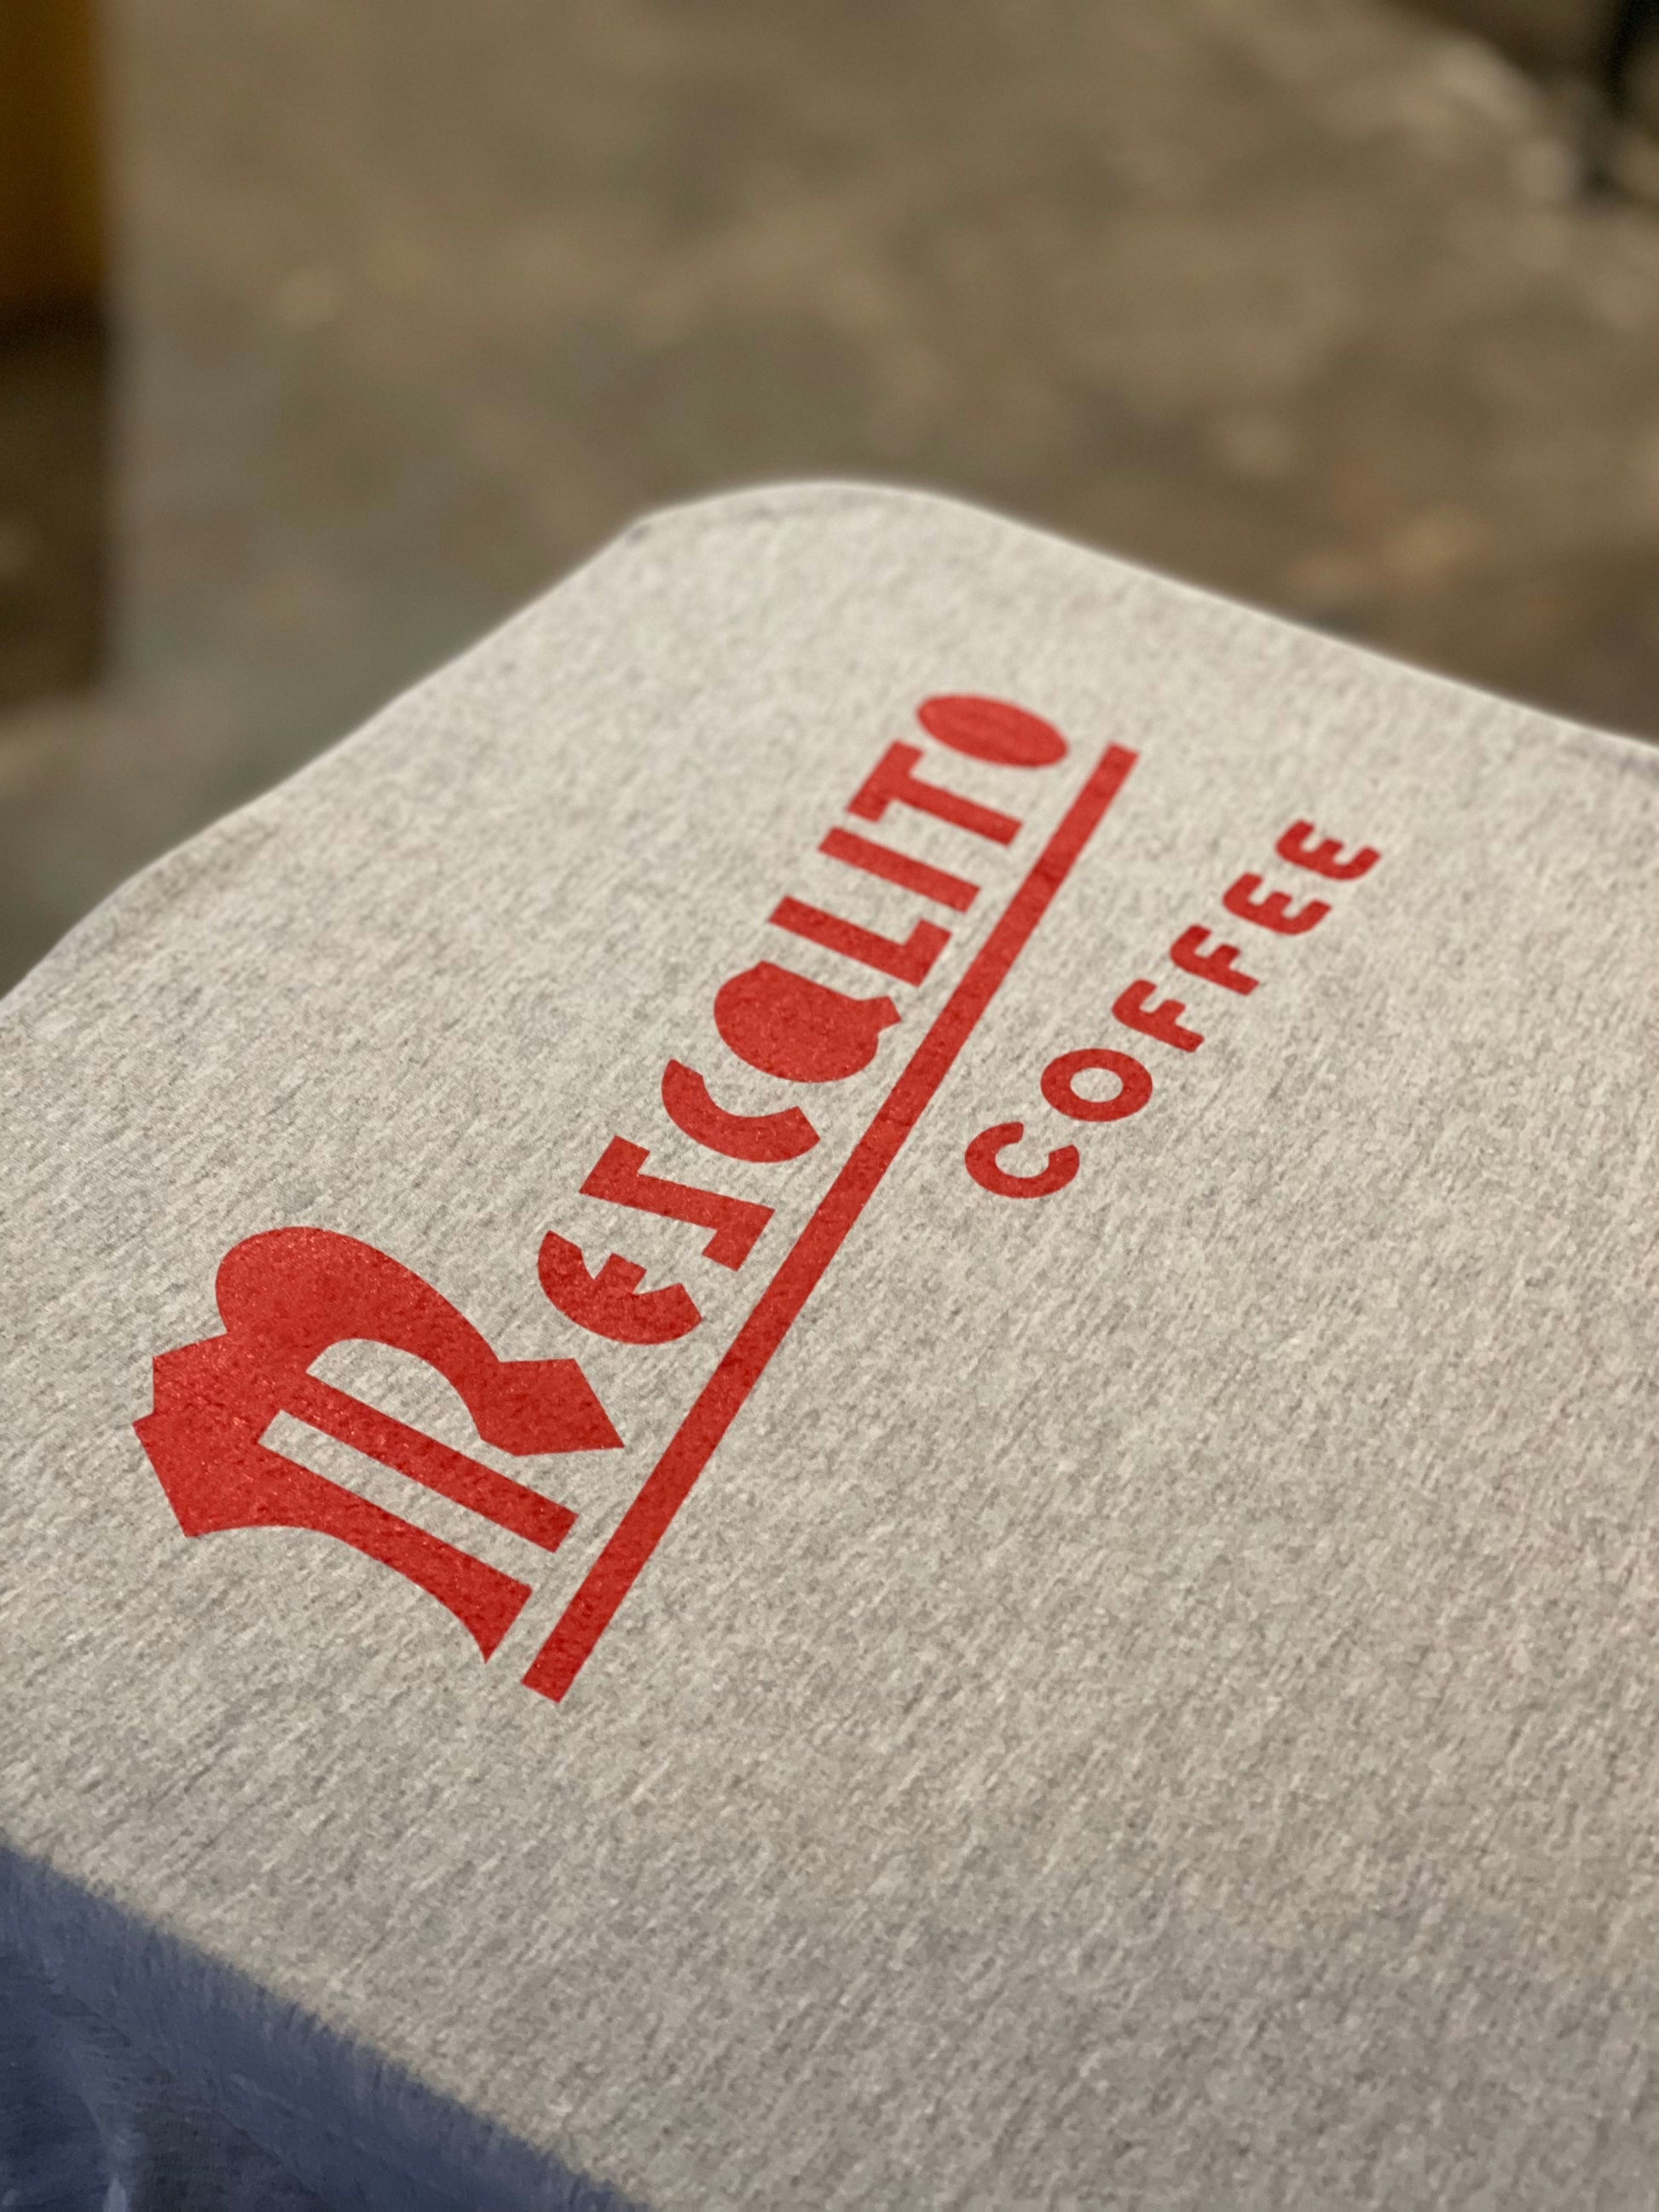 La Marzocco Edition | Mescalito Coffee - Coffee - Shirt